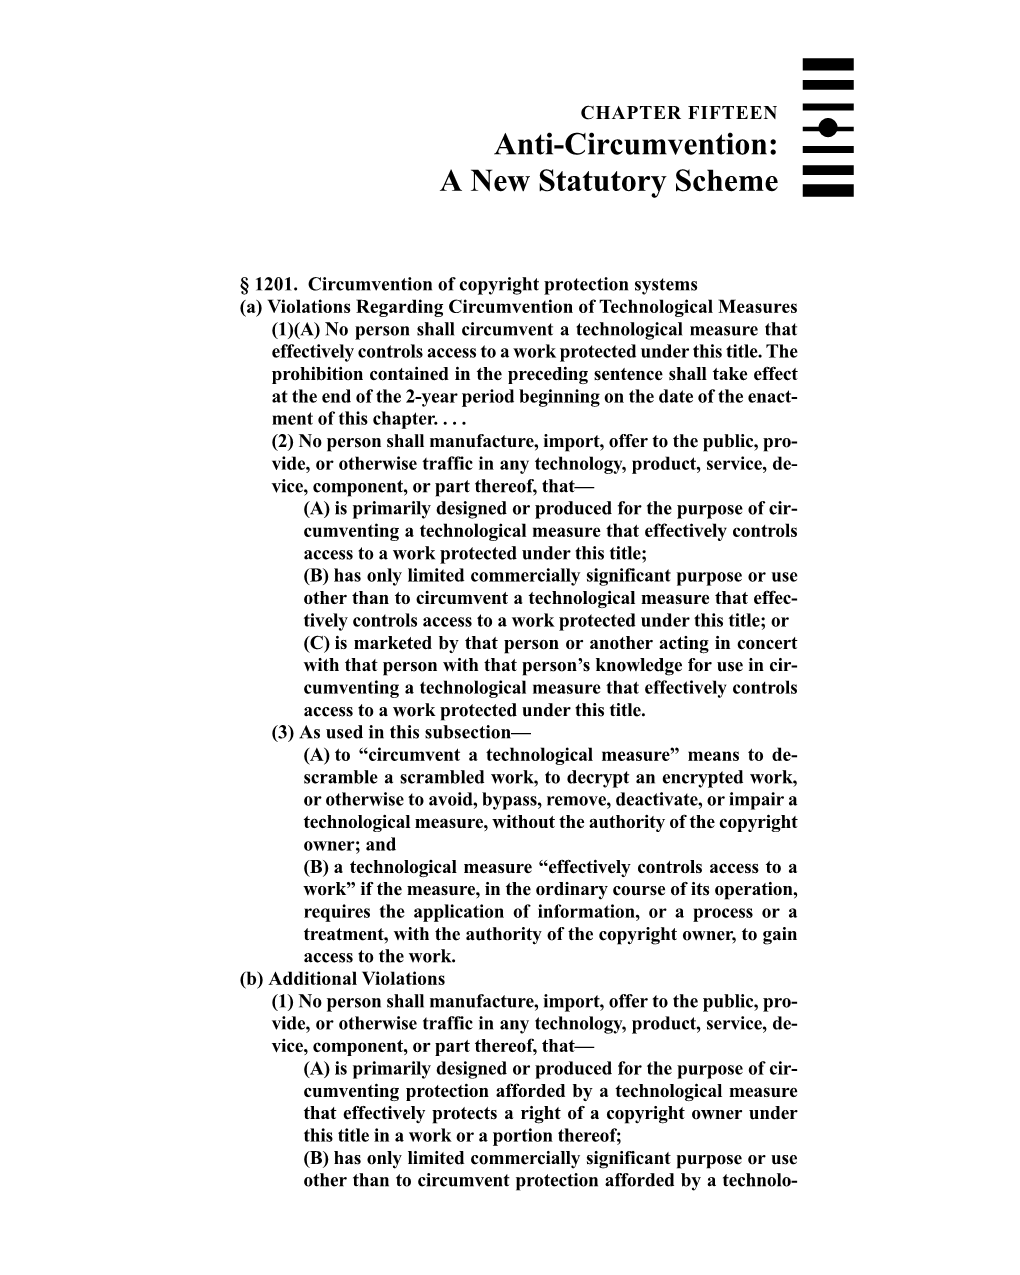 Anti-Circumvention: a New Statutory Scheme